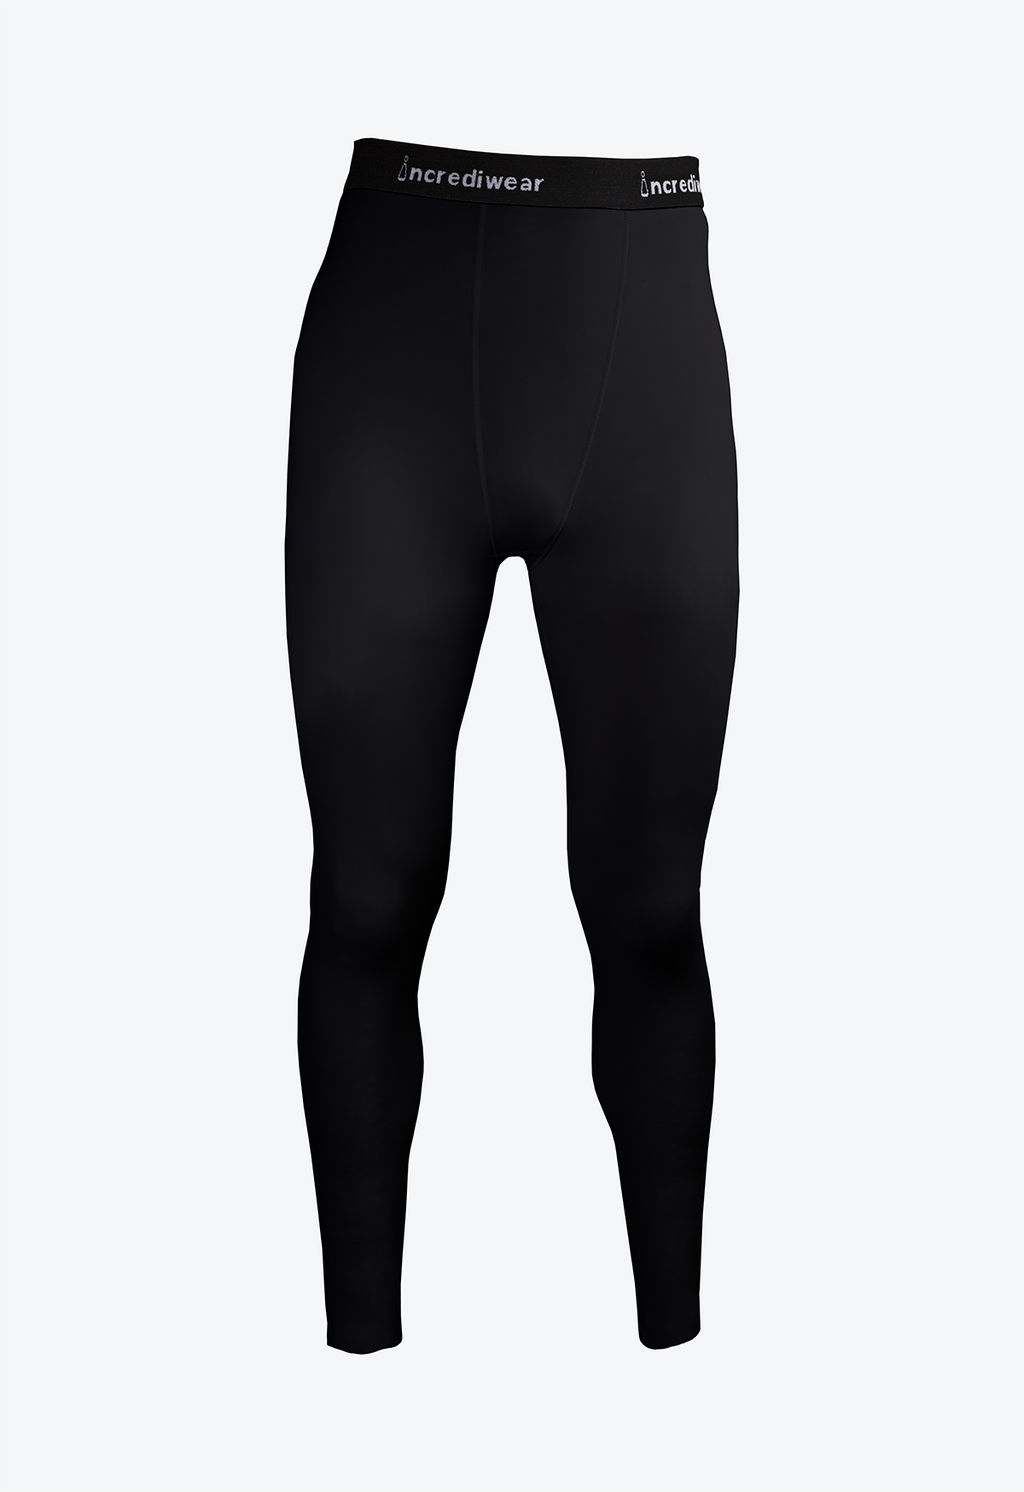 Men's Skinfit Blue Black Mesh Shiny Spandex Tights Compression Pants Small  | eBay